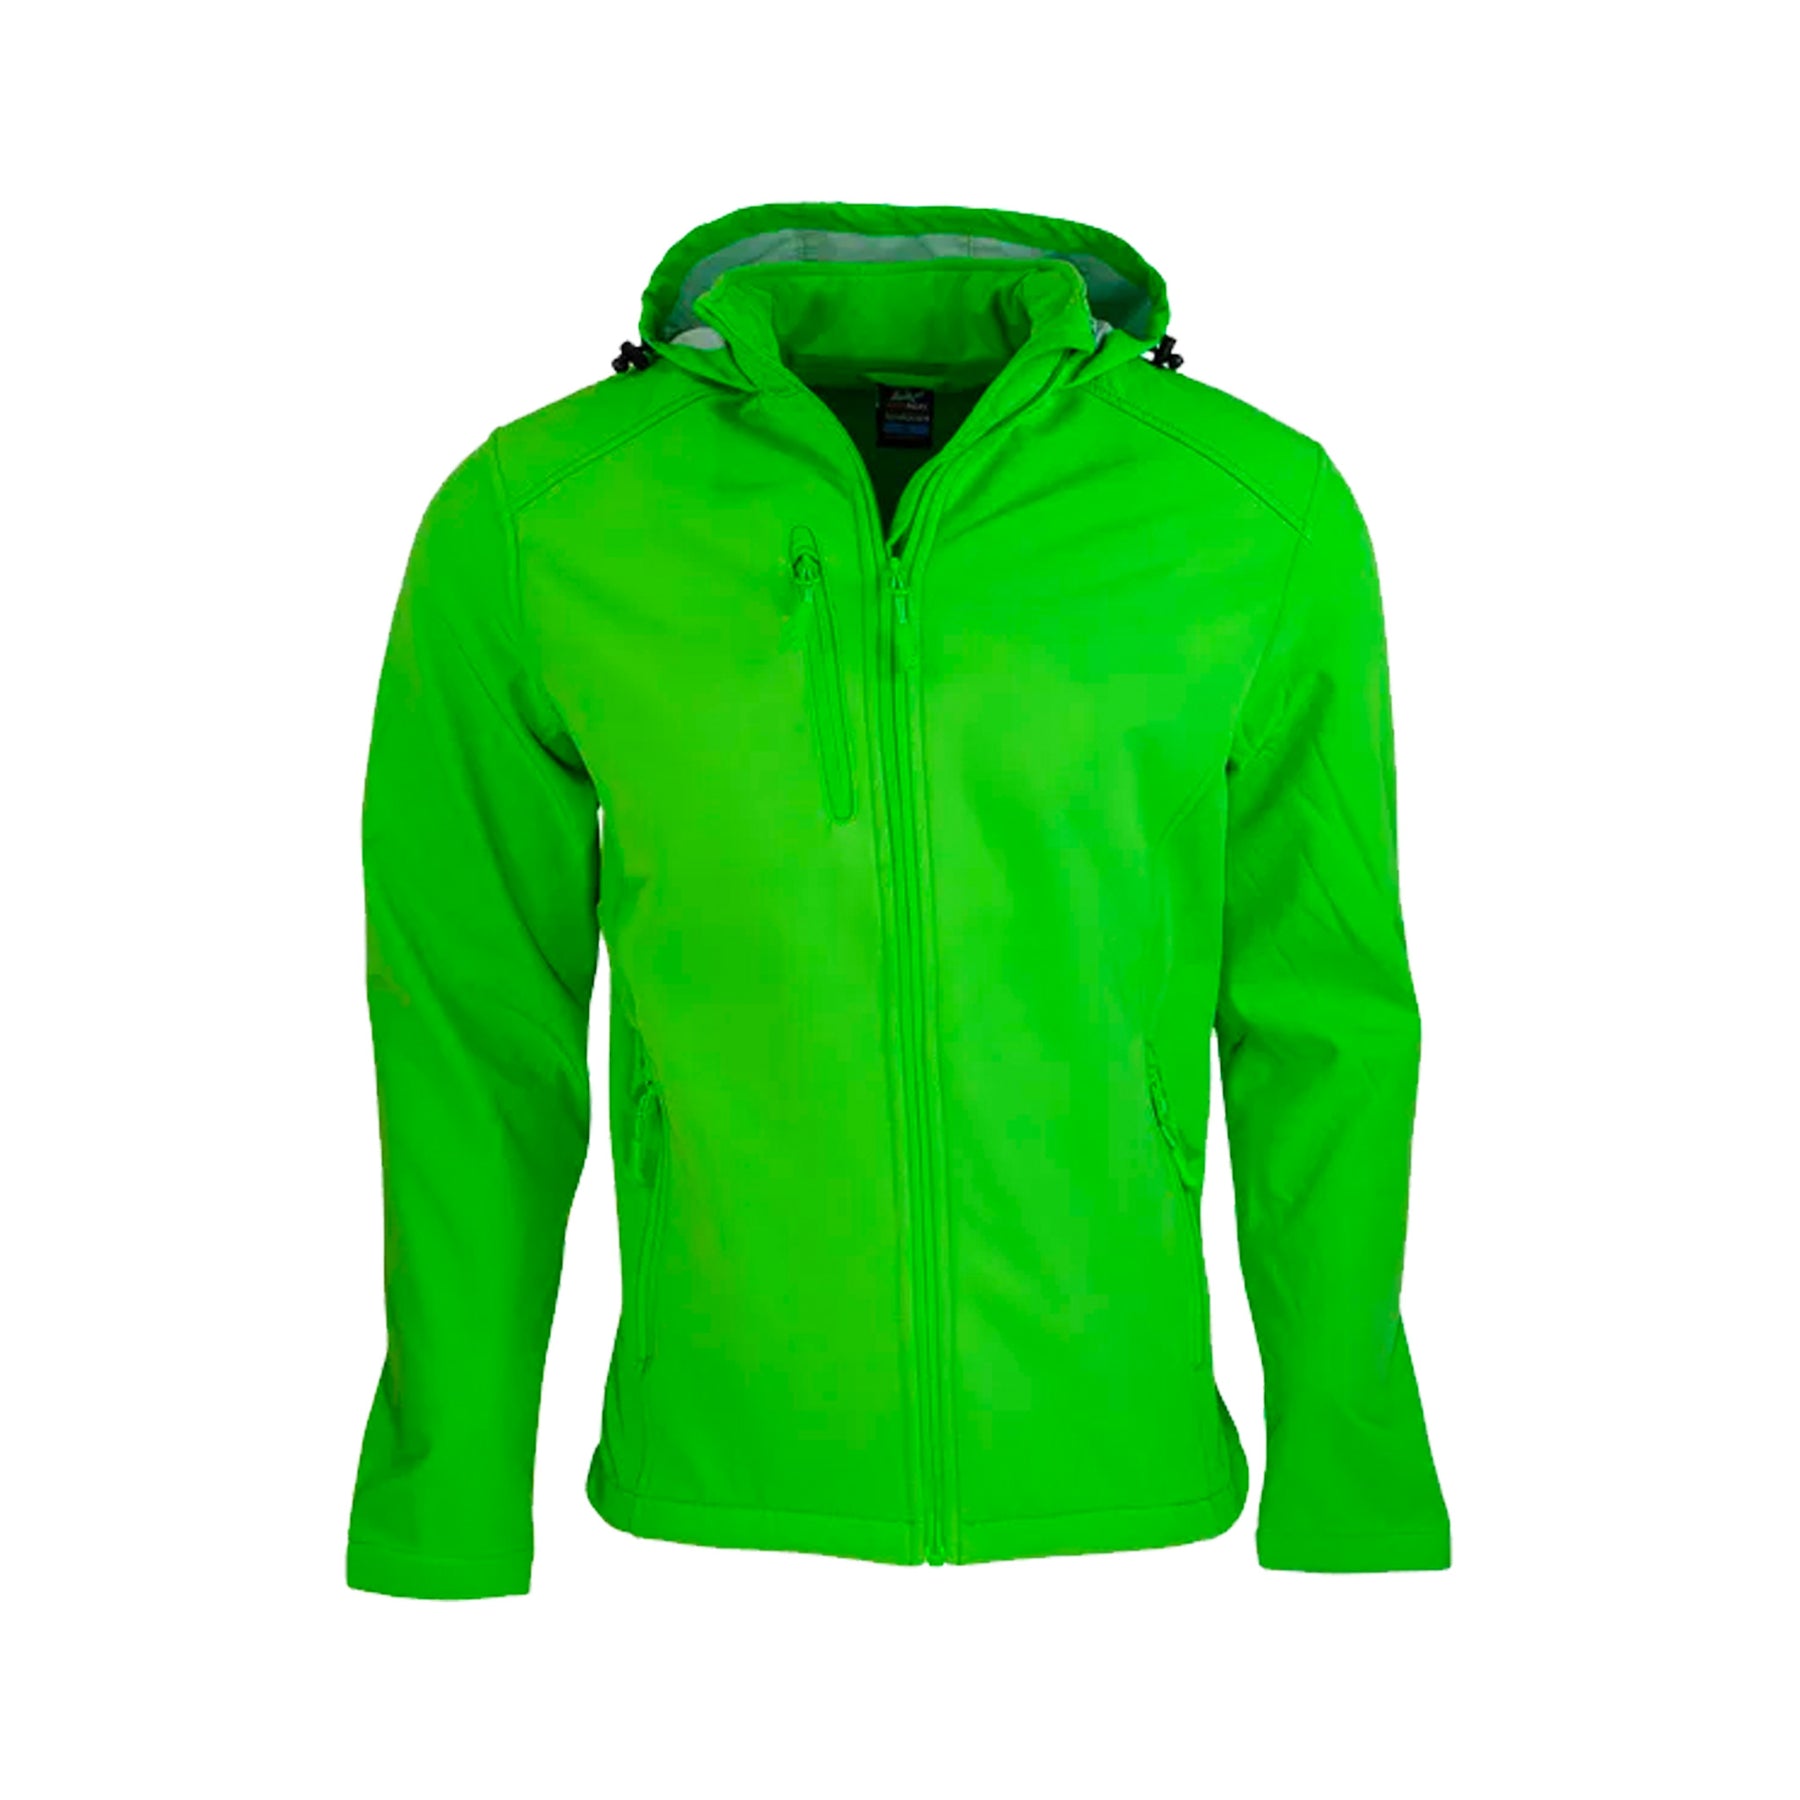 olympus softshell jacket in green